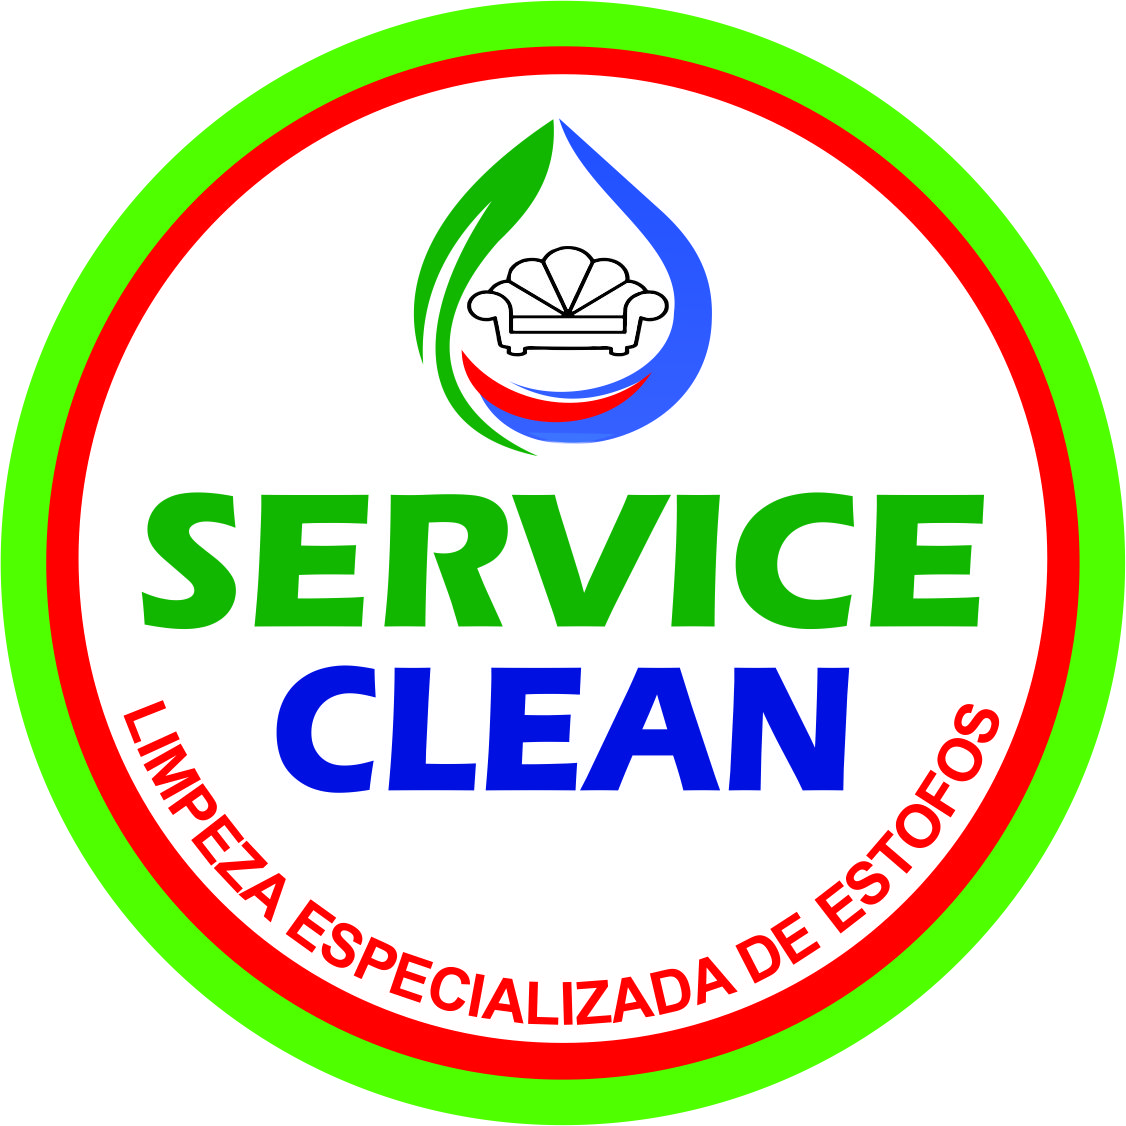 Service Clean - Vila Nova de Famalicão - Limpeza de Persianas